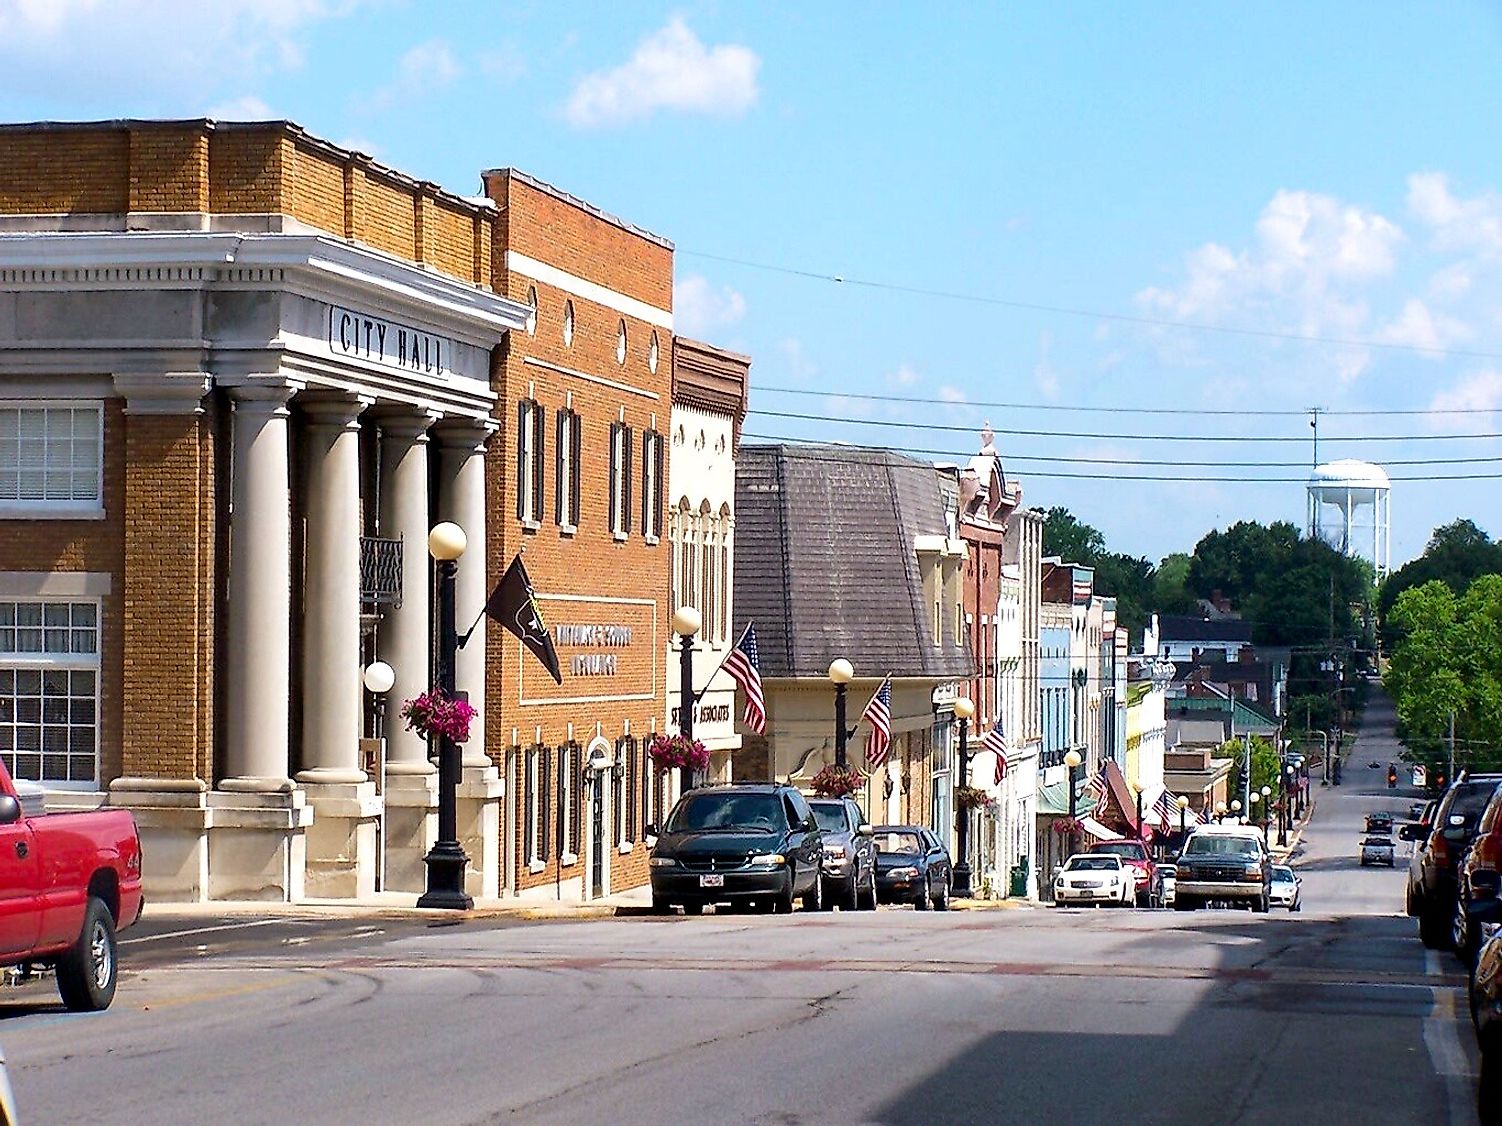 Beautiful downtown area of Harrodsburg, Kentucky. Image credit: J. Stephen Conn/Flickr.